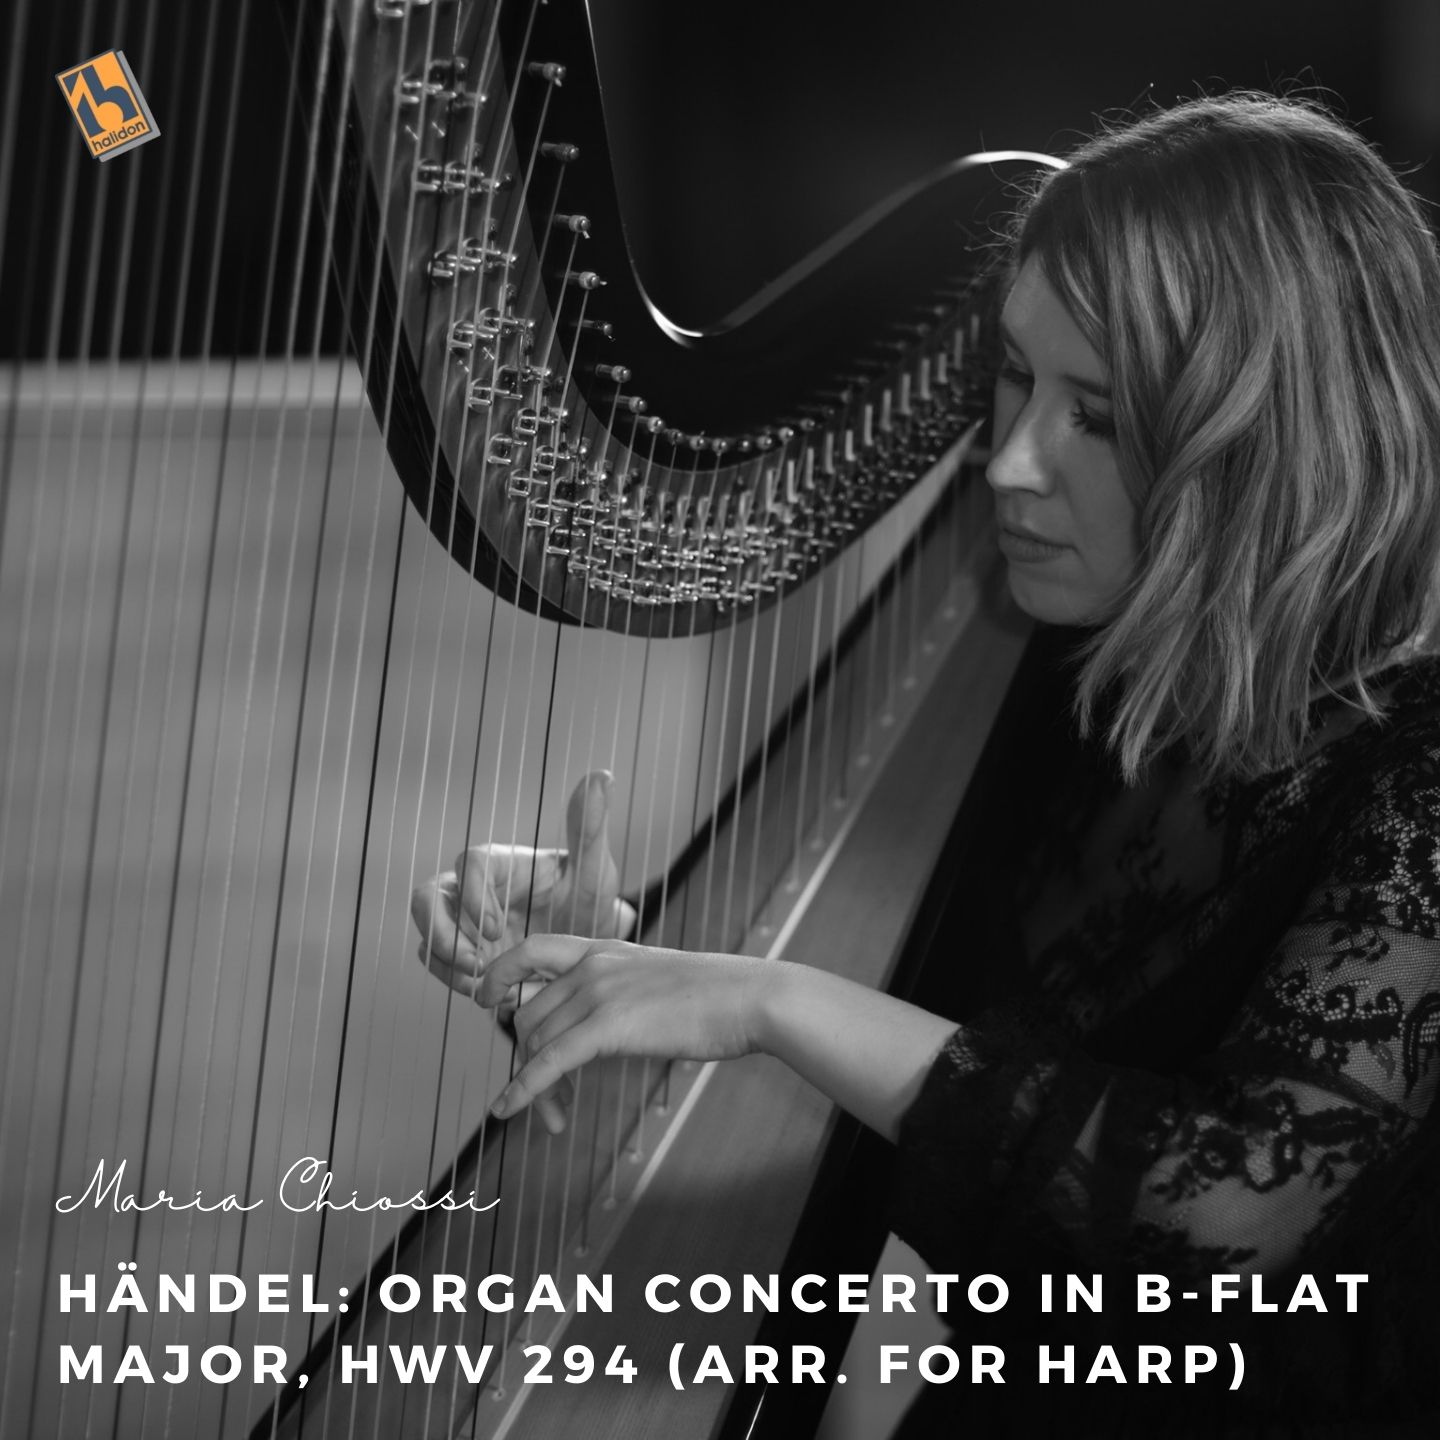 Händel: Organ Concerto in B-flat major, HWV 294 (Arr. for Harp)